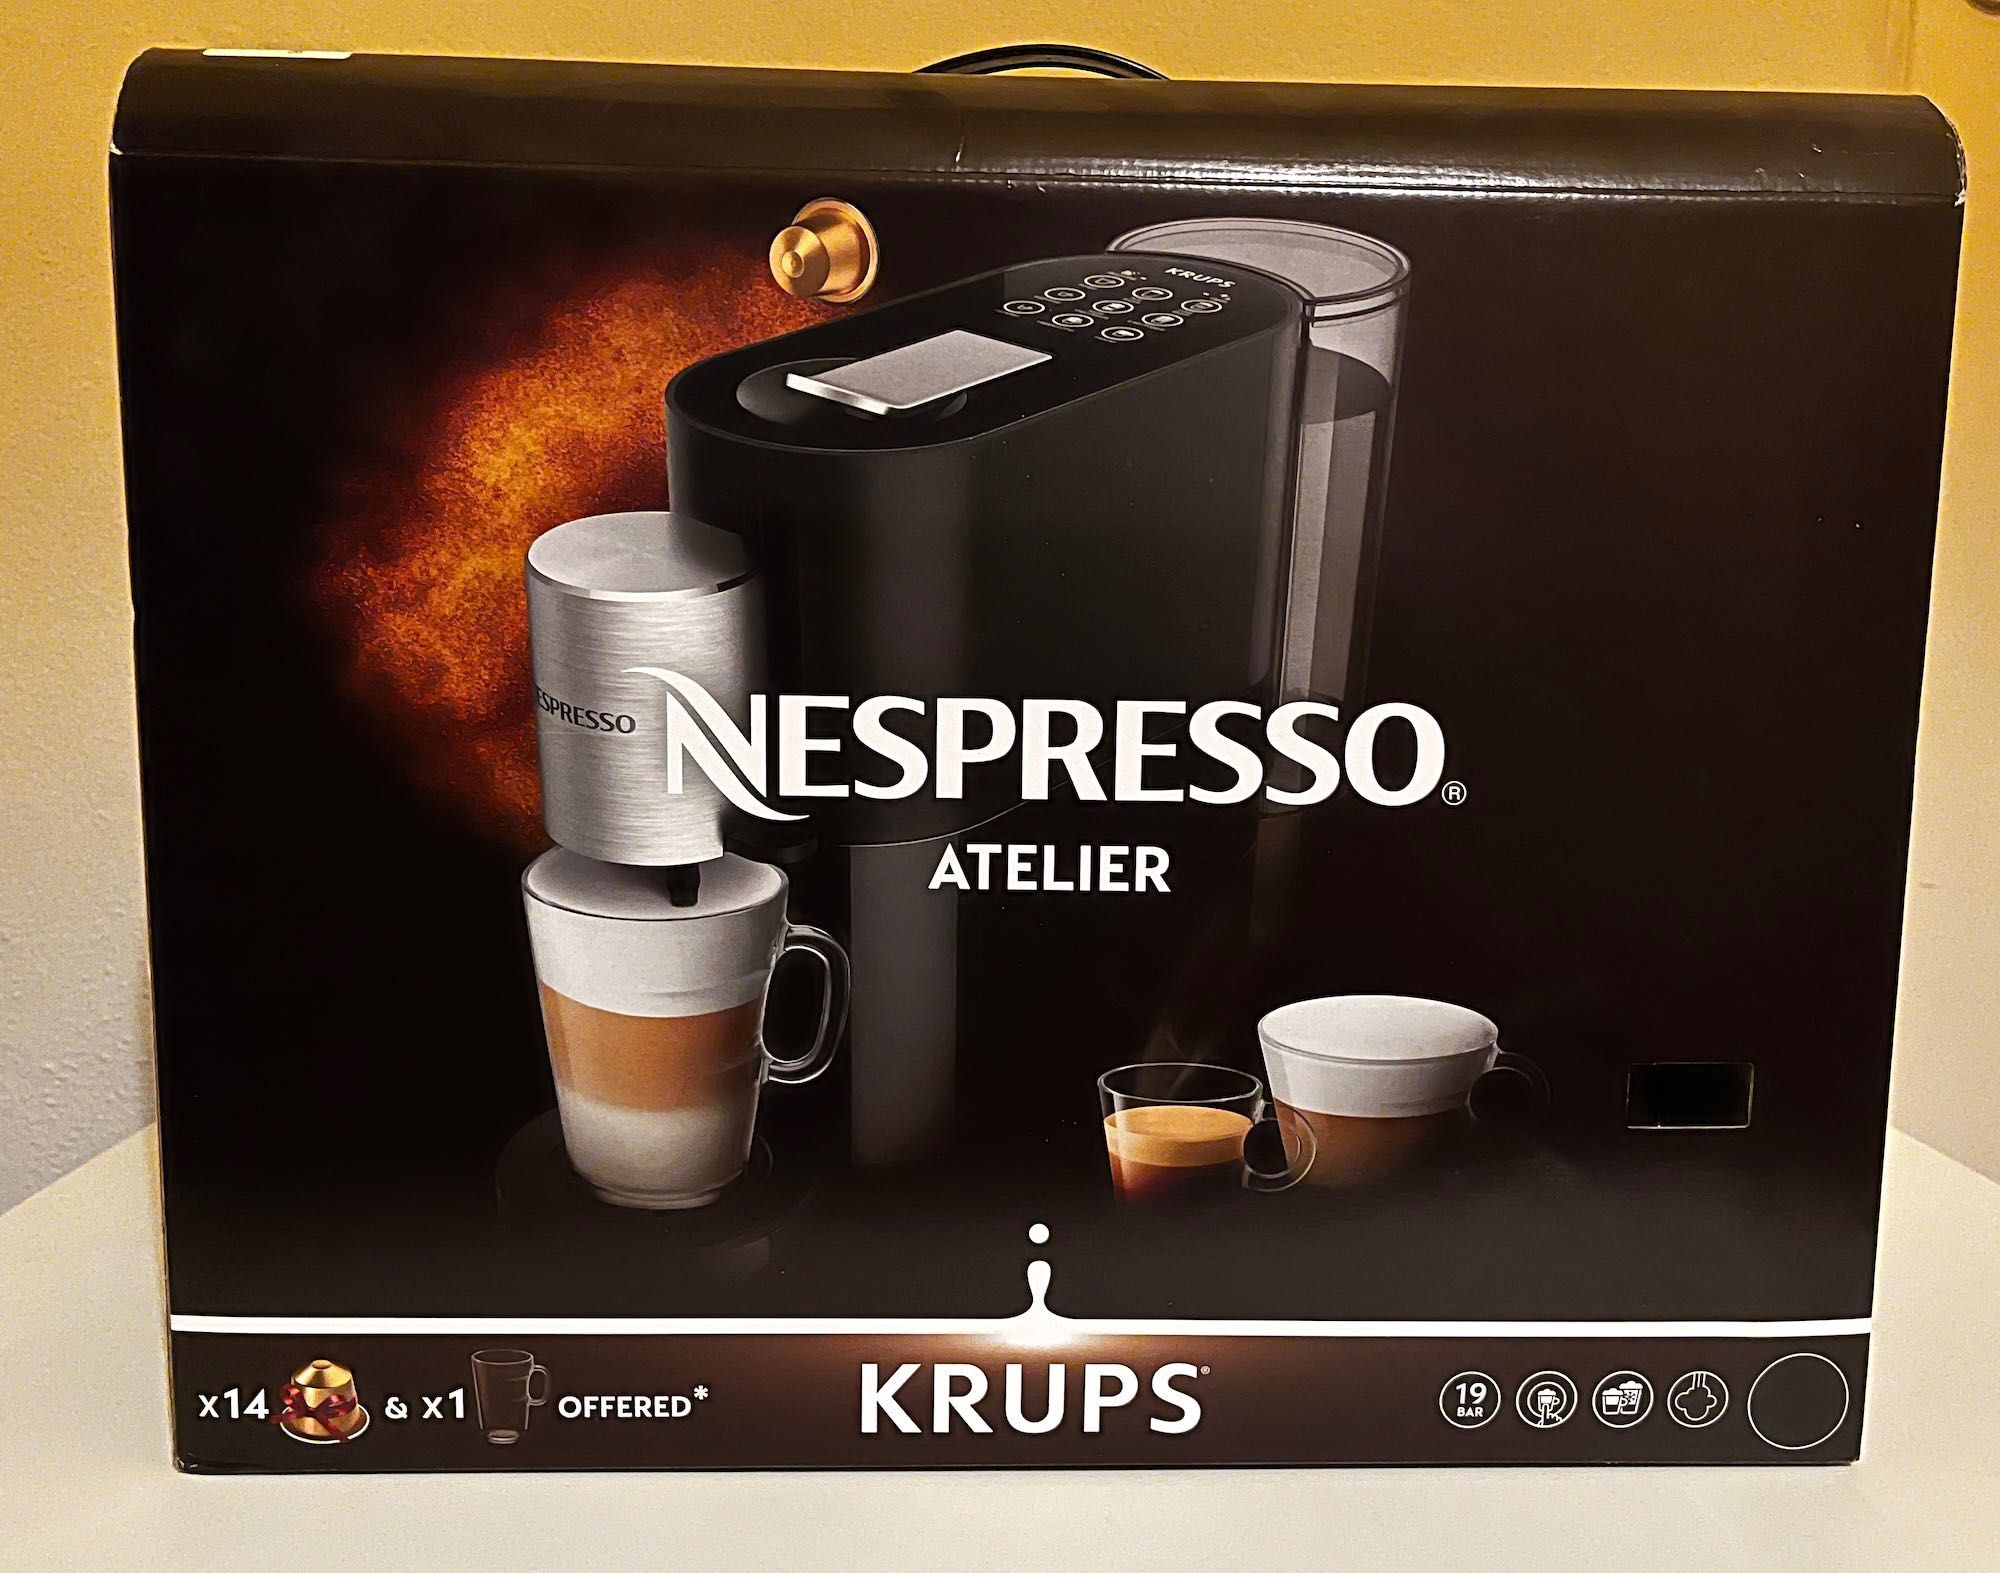 Nespresso Krups Atelier